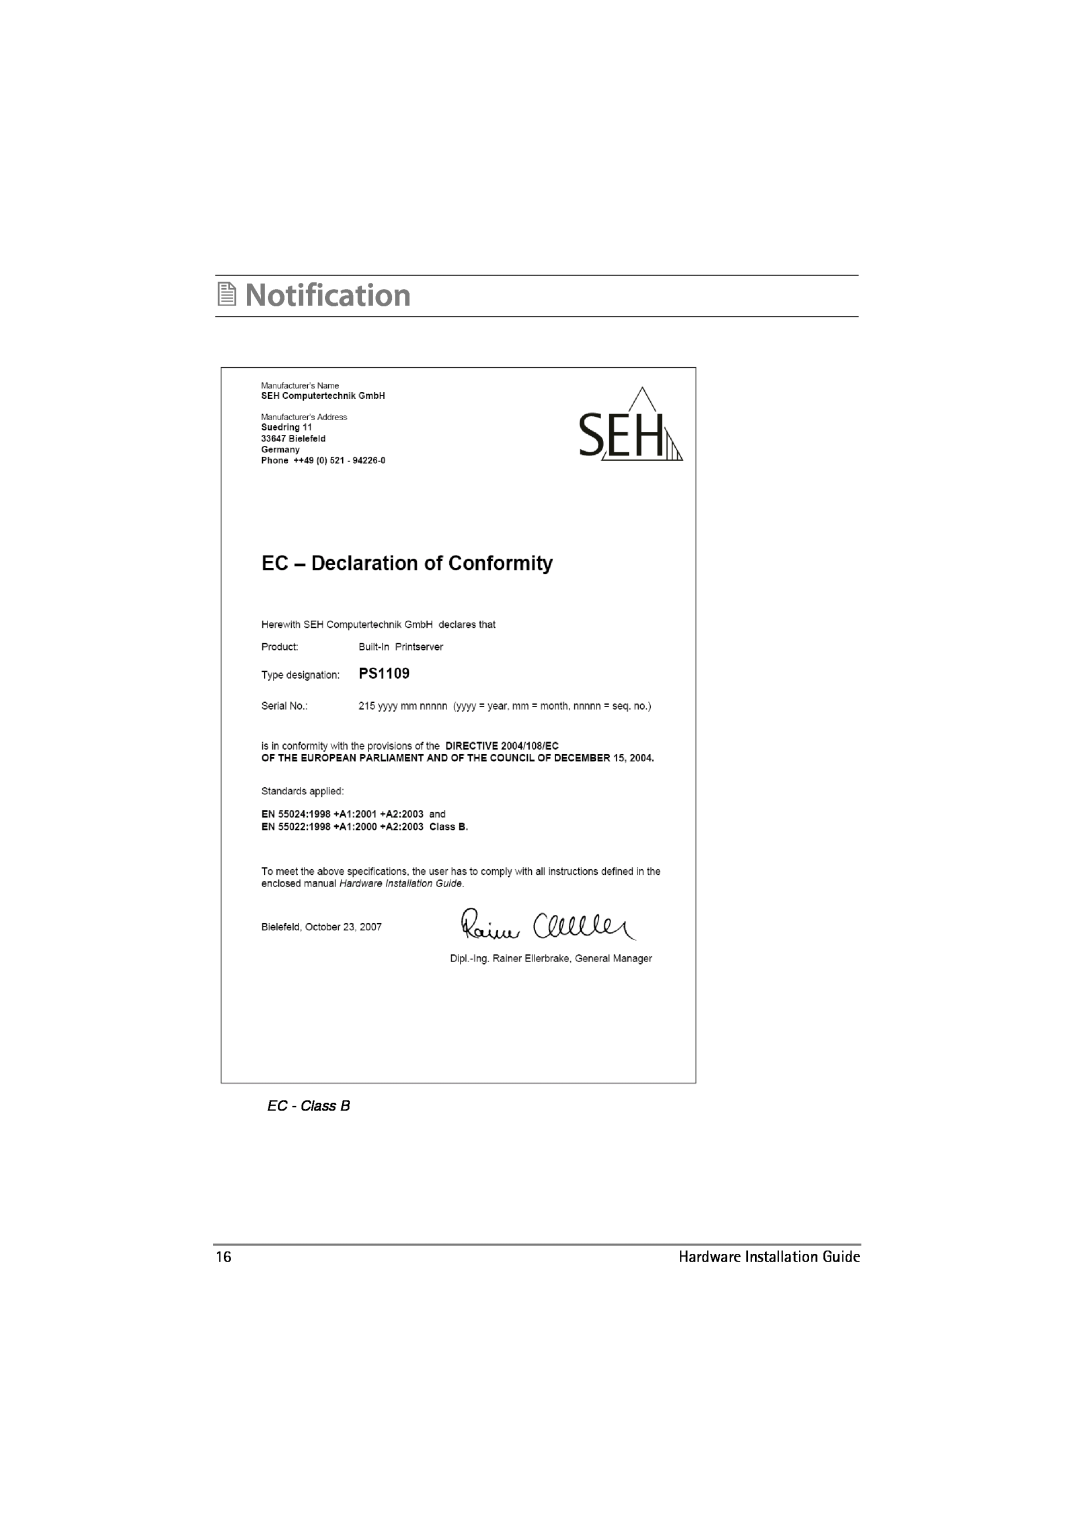 SEH Computertechnik PS1109 manual Notification, EC - Class B, Hardware Installation Guide 